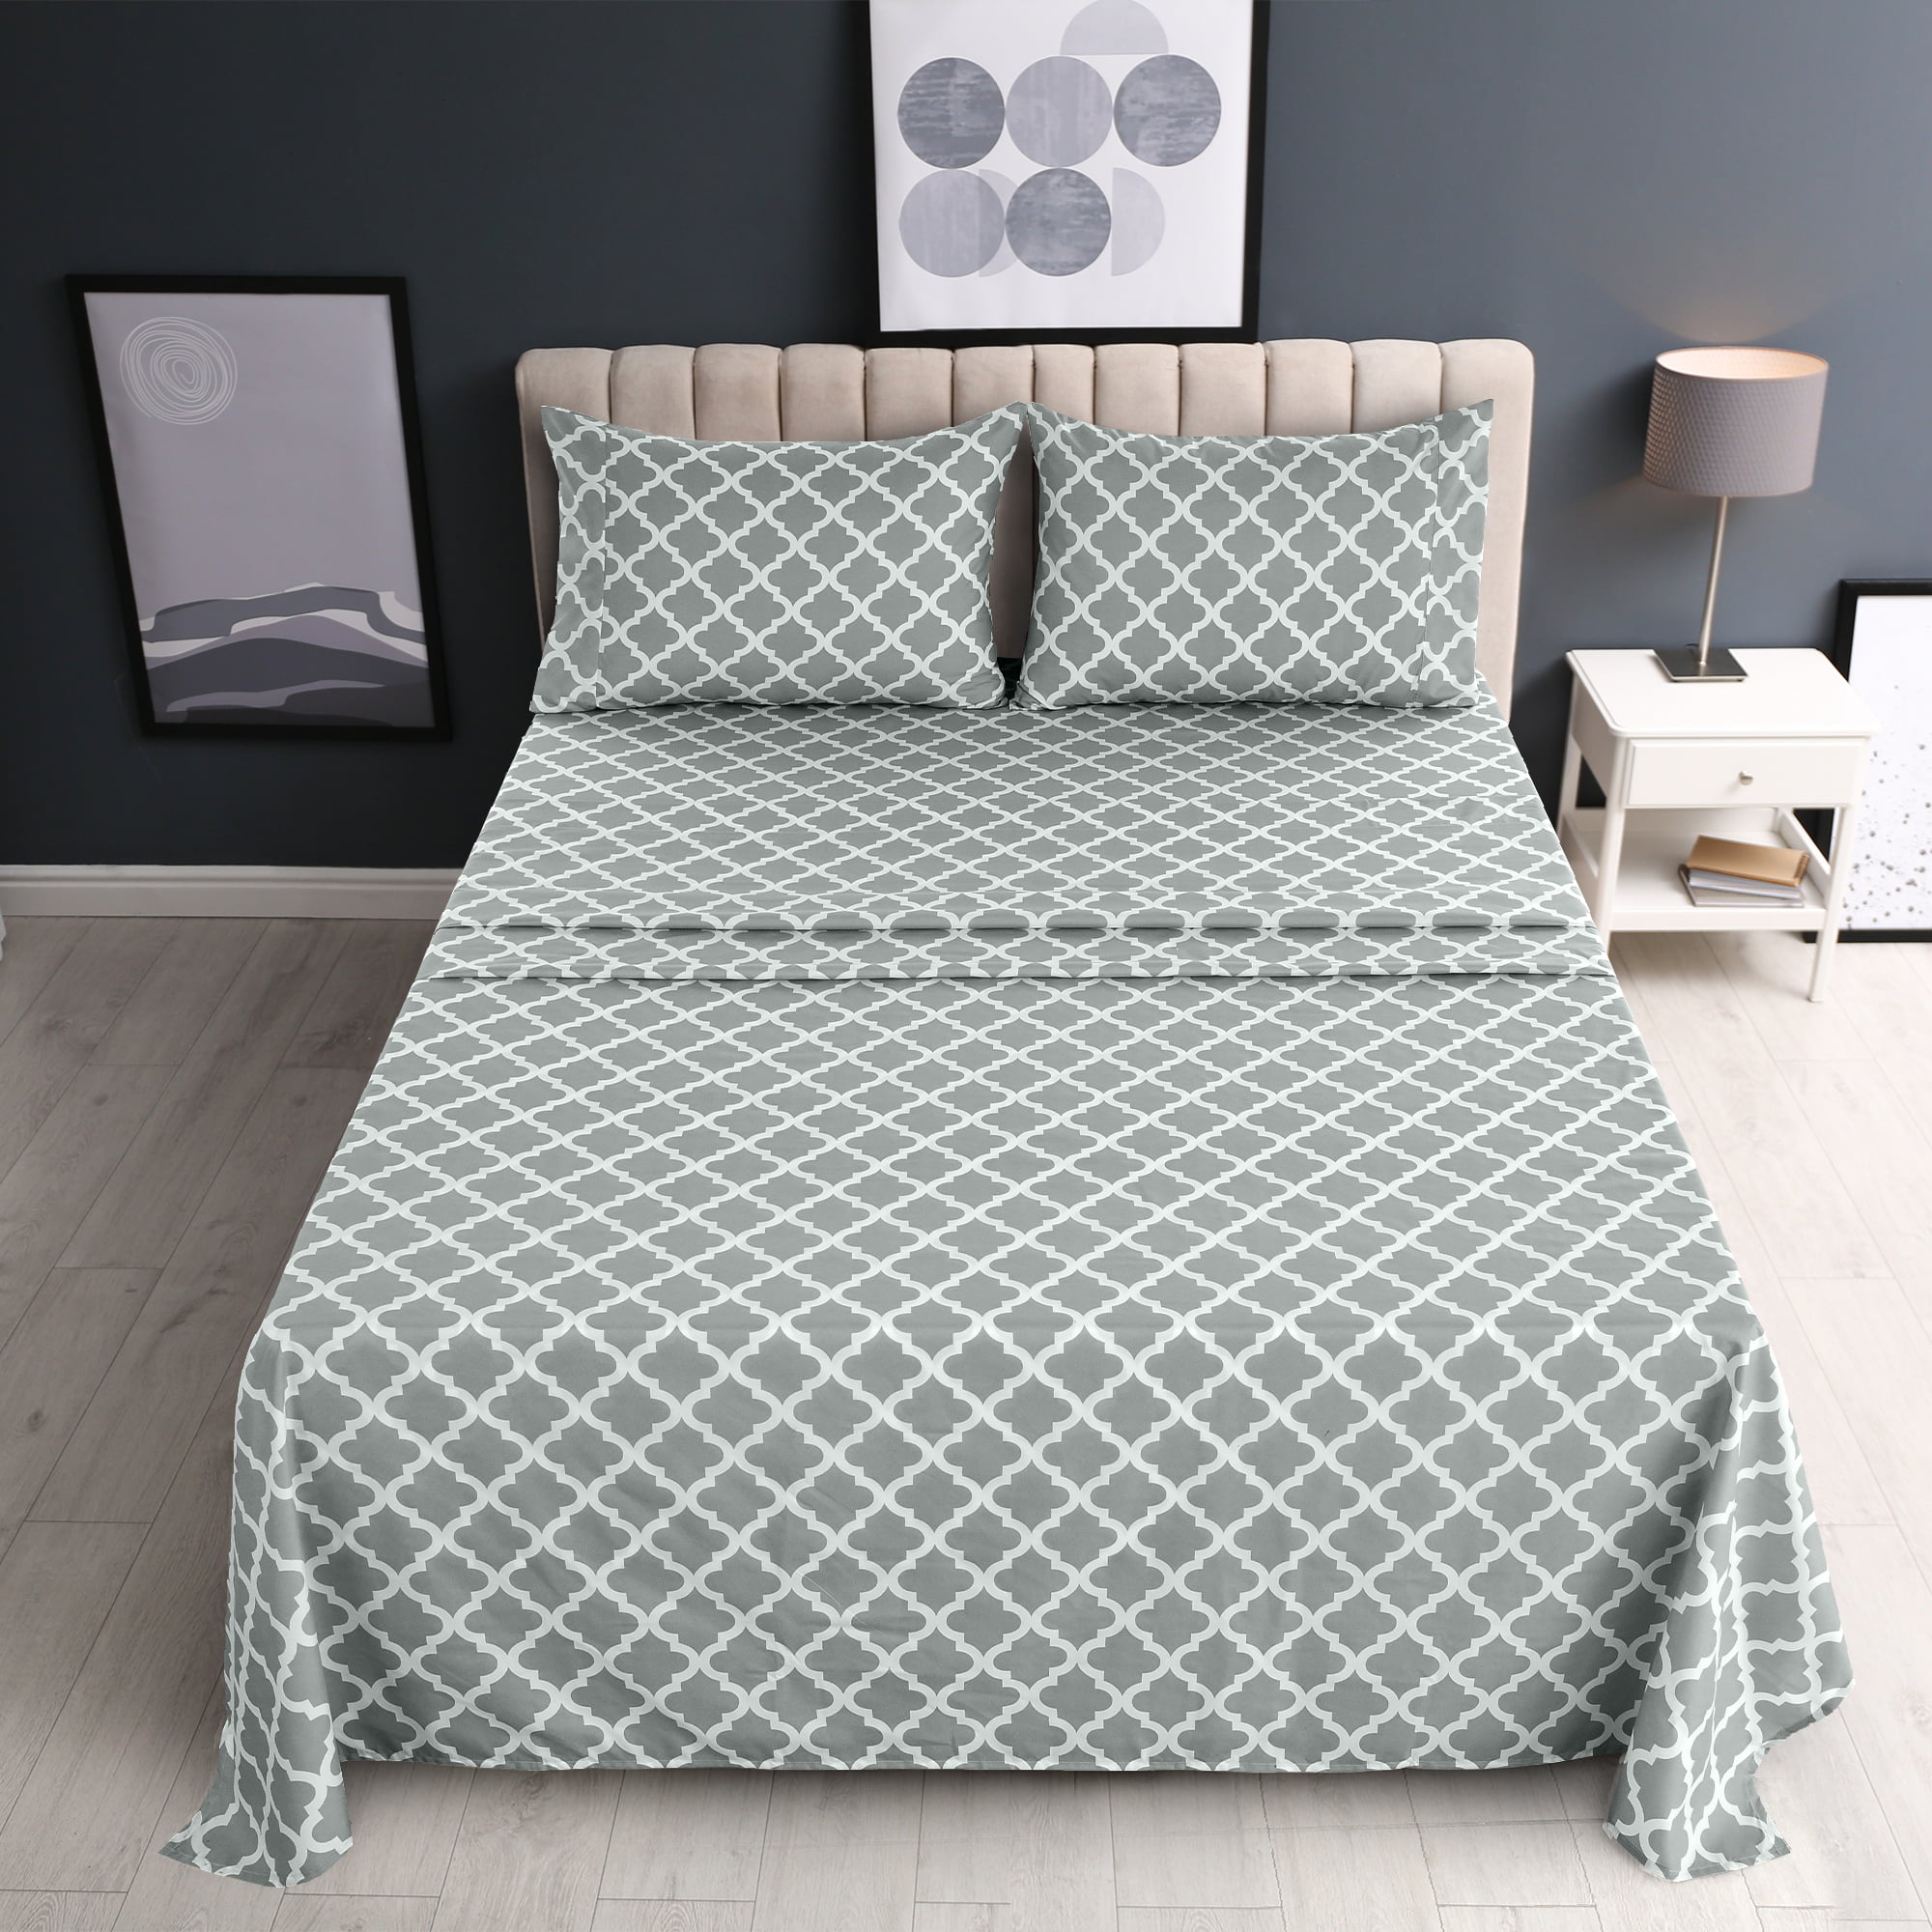 Luxury Thermal Flannelette Flat Sheet Cotton Bedding Sheet and Pillowcase Set 